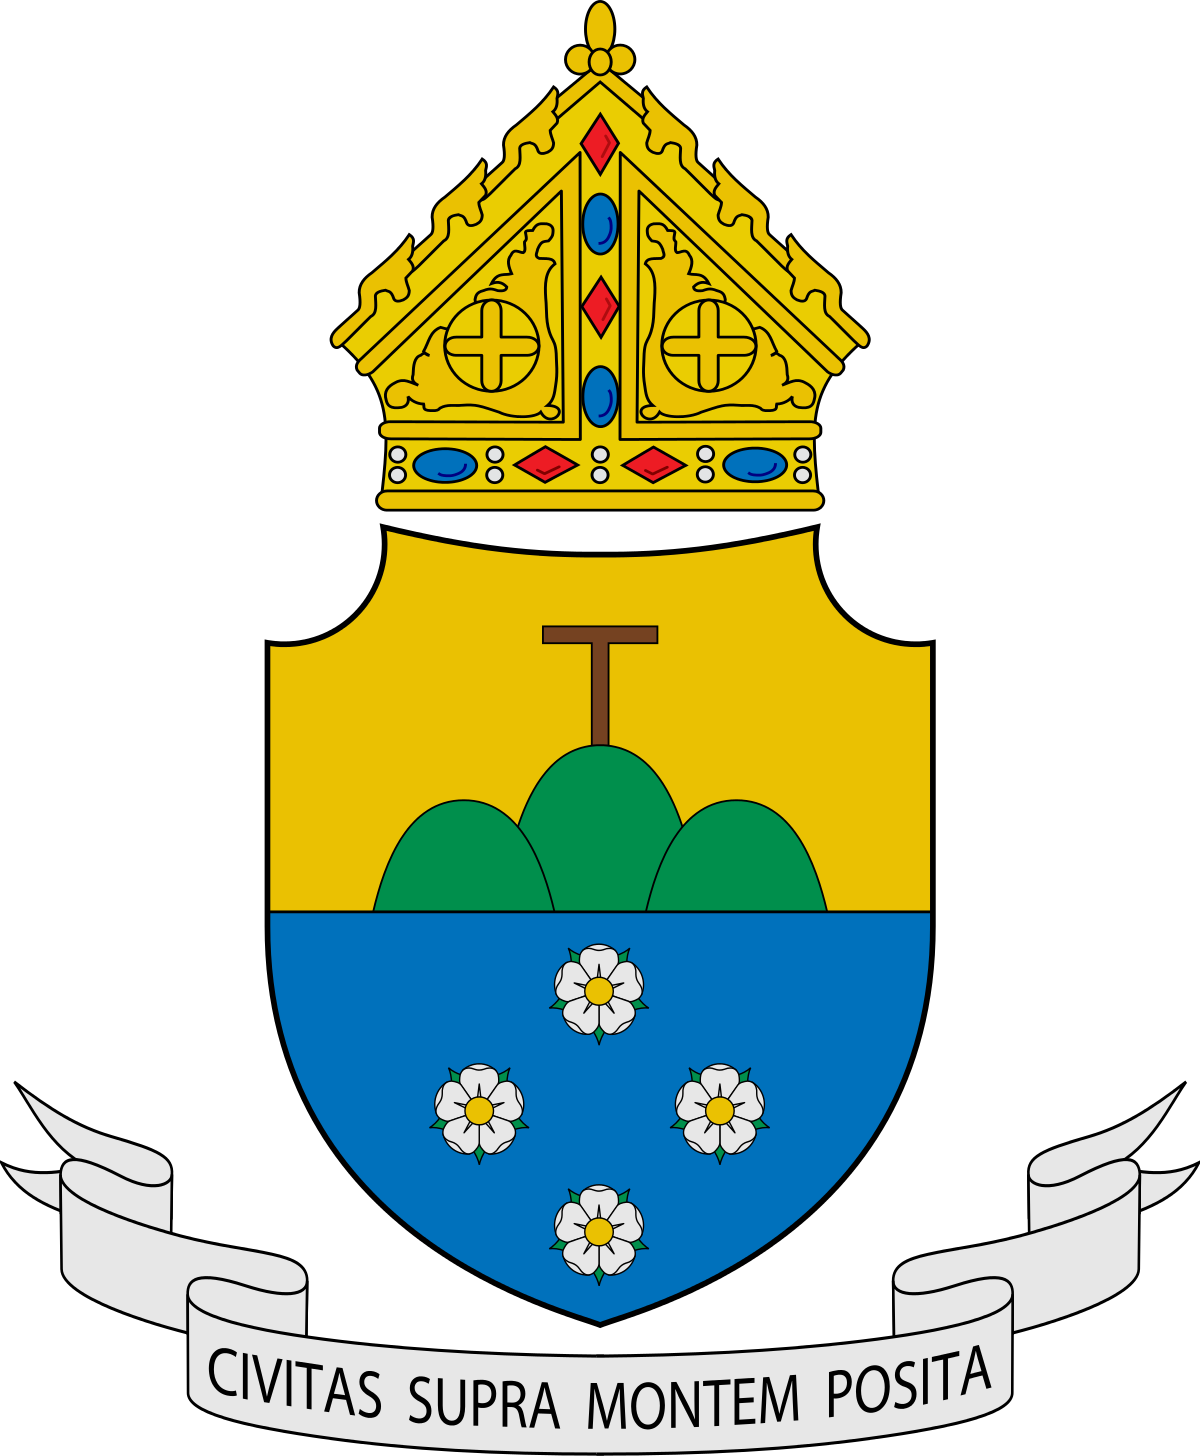 Roman Catholic Archdiocese Of Newark (1200x1456)